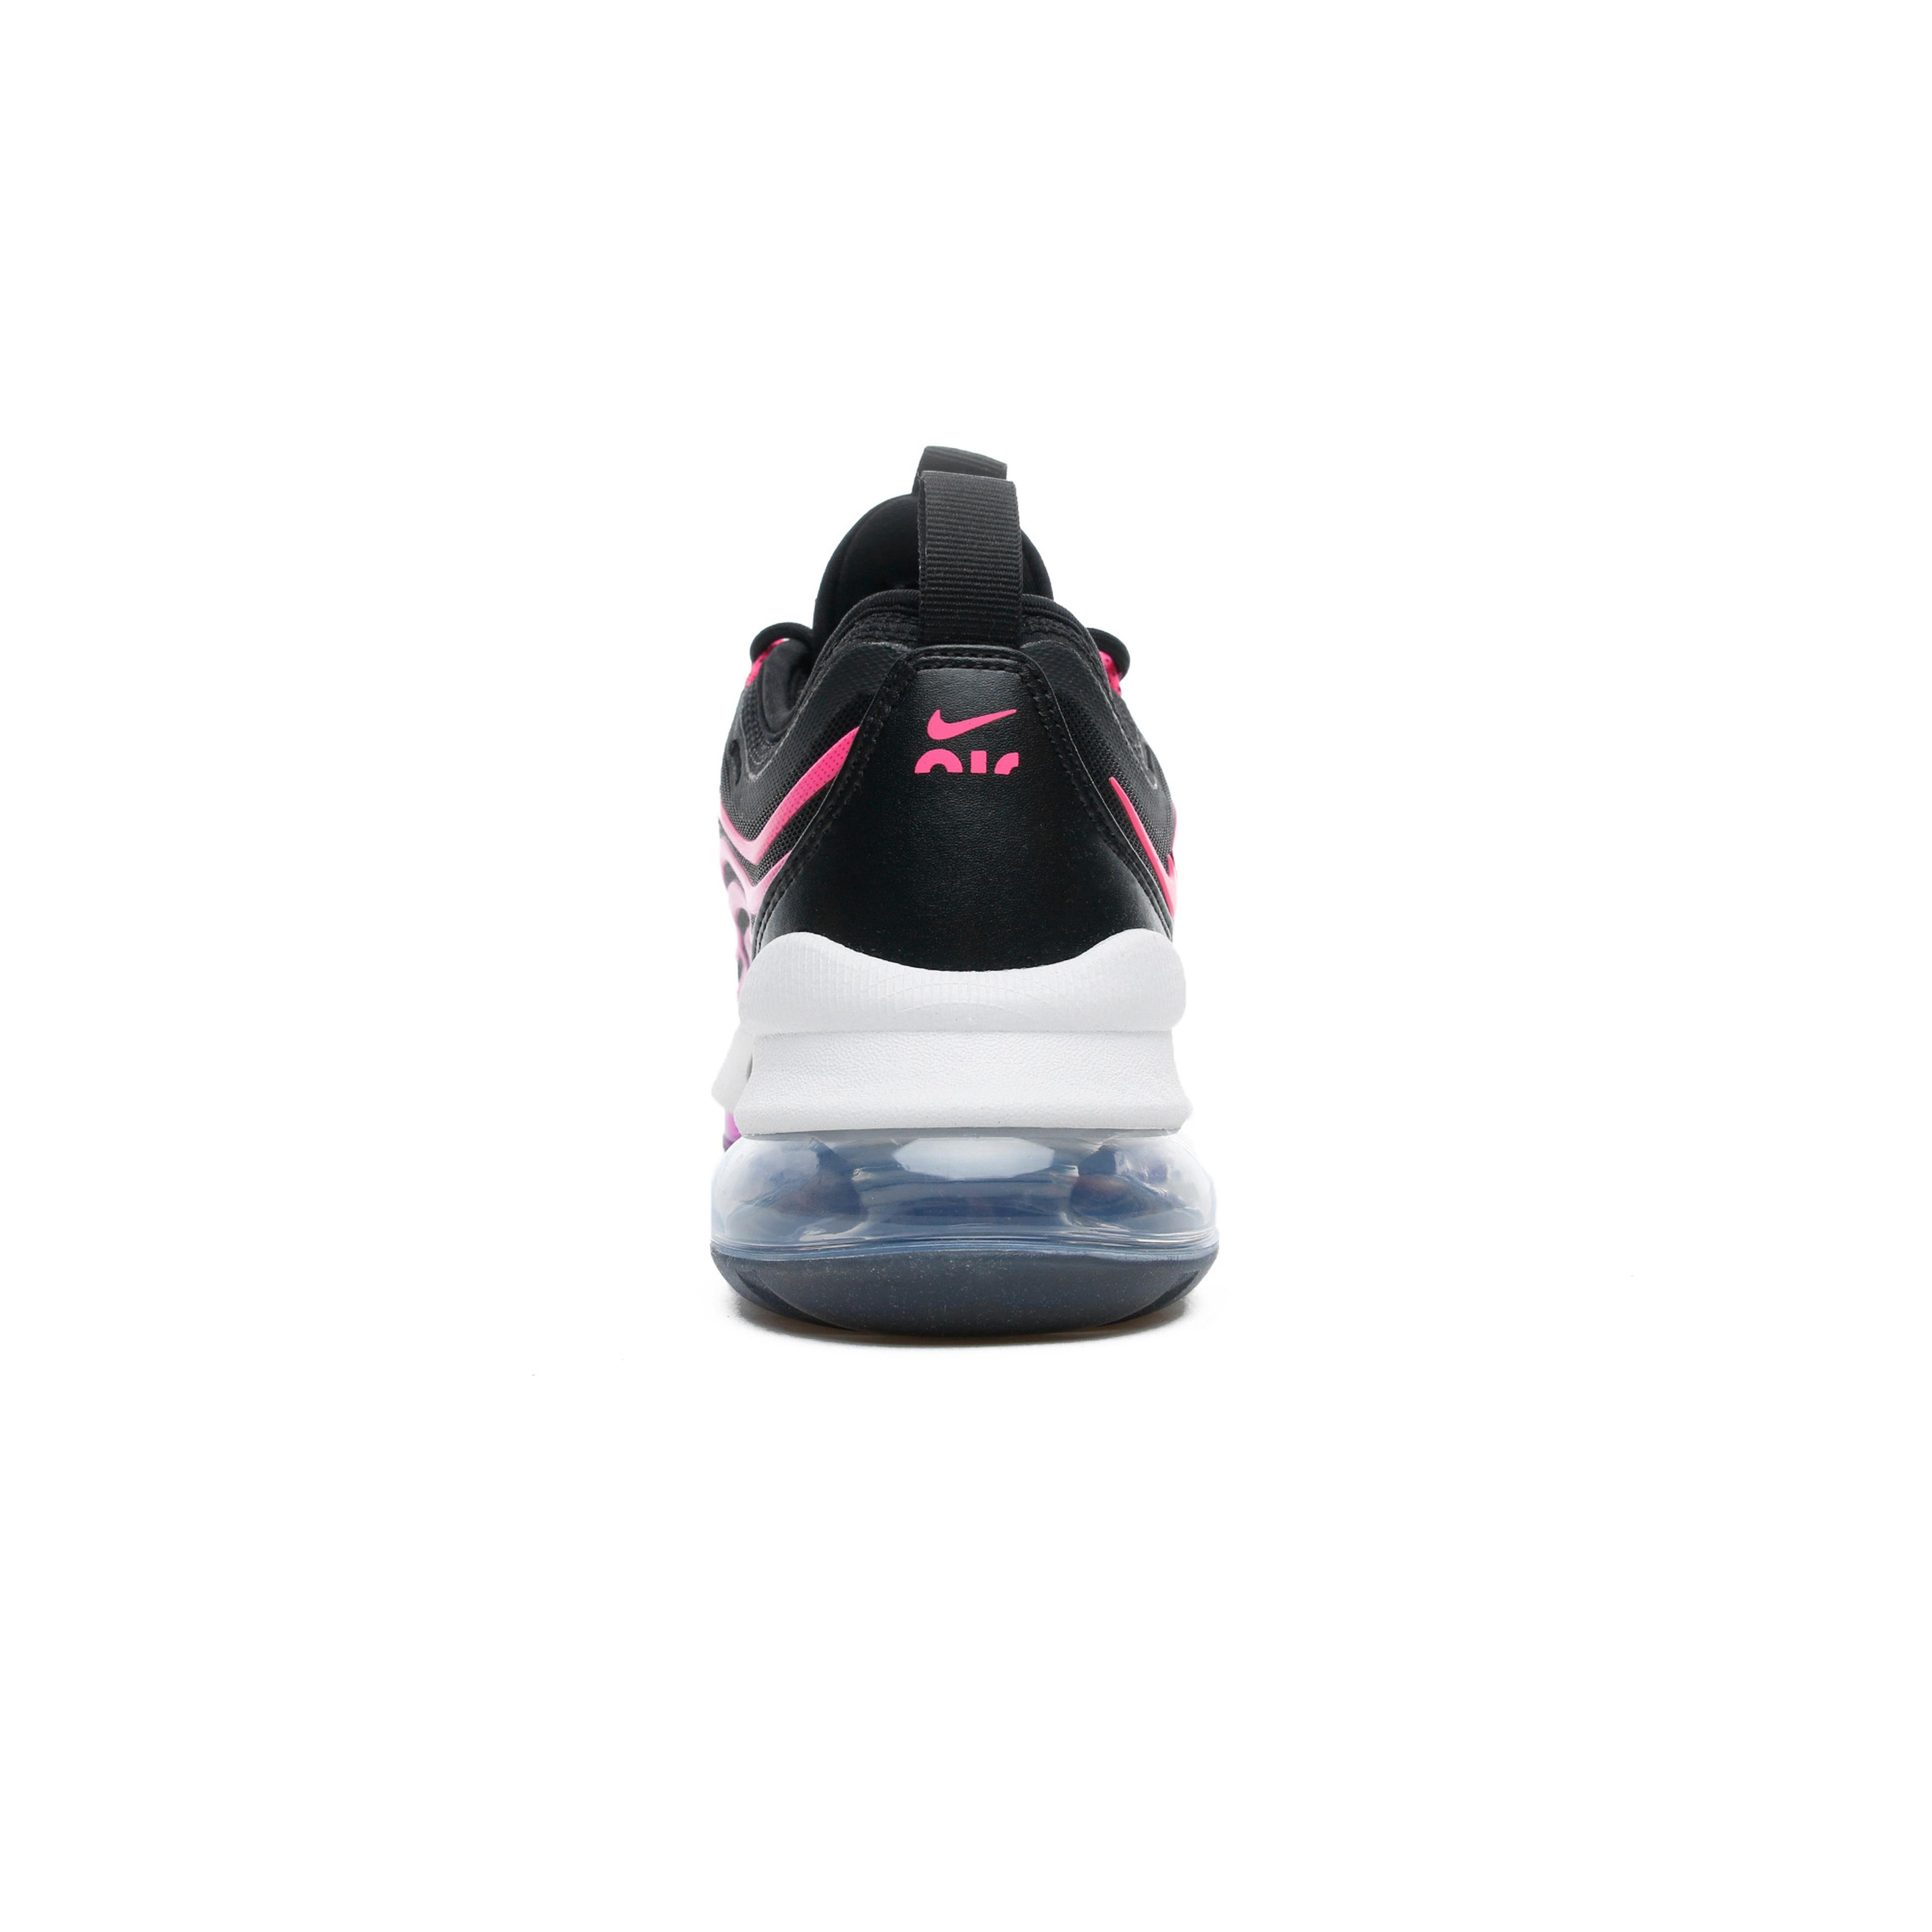 Nike Air Max ZM950 Kadın Siyah-Pembe Spor Ayakkabı